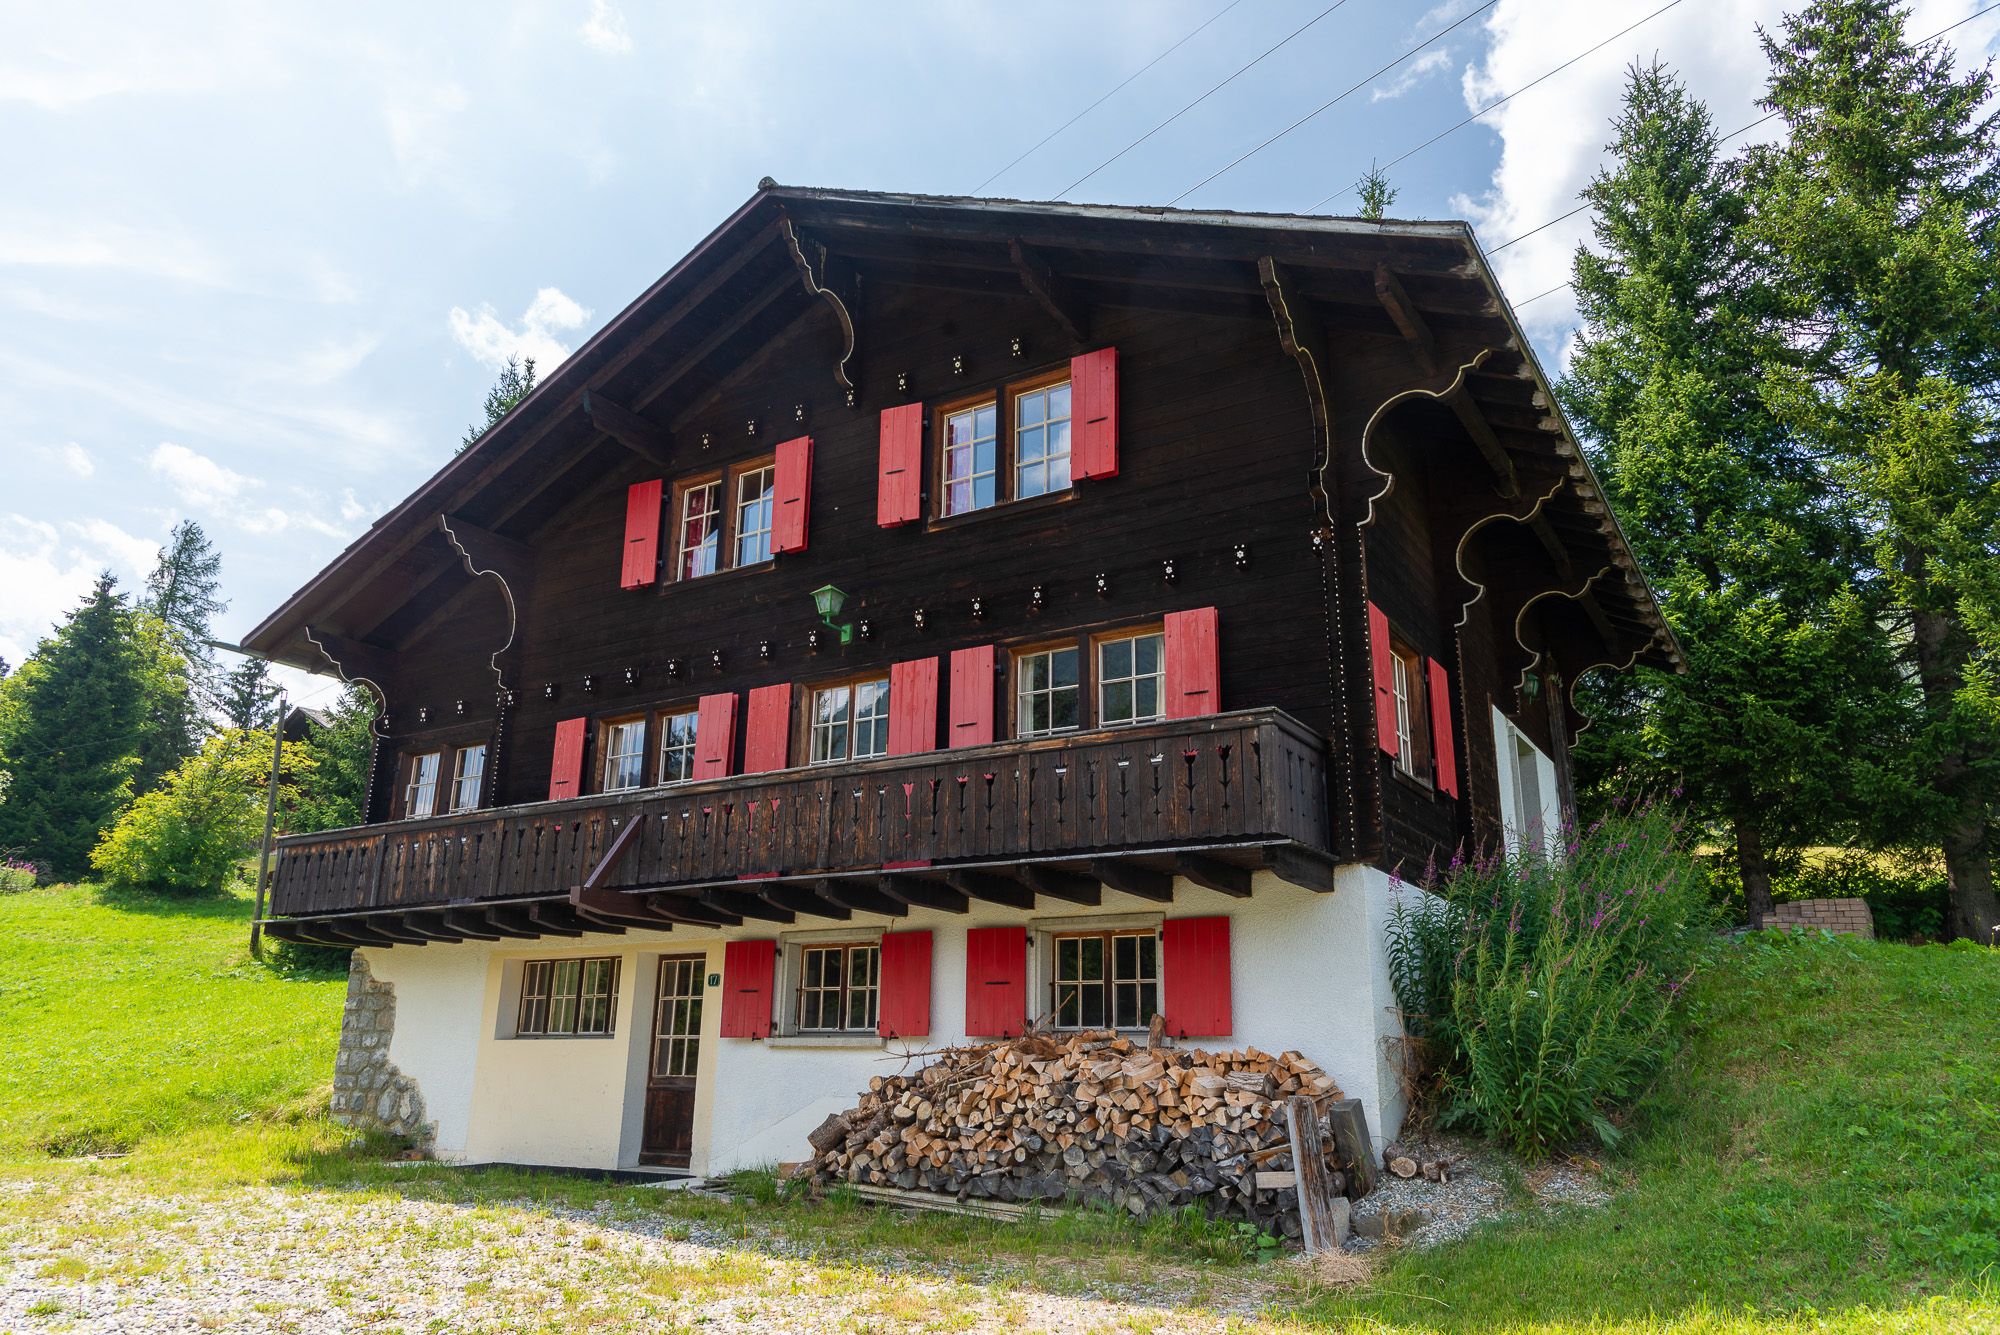 Chalet La Bürsch, (Les Mosses).  Ferienhaus in der Schweiz